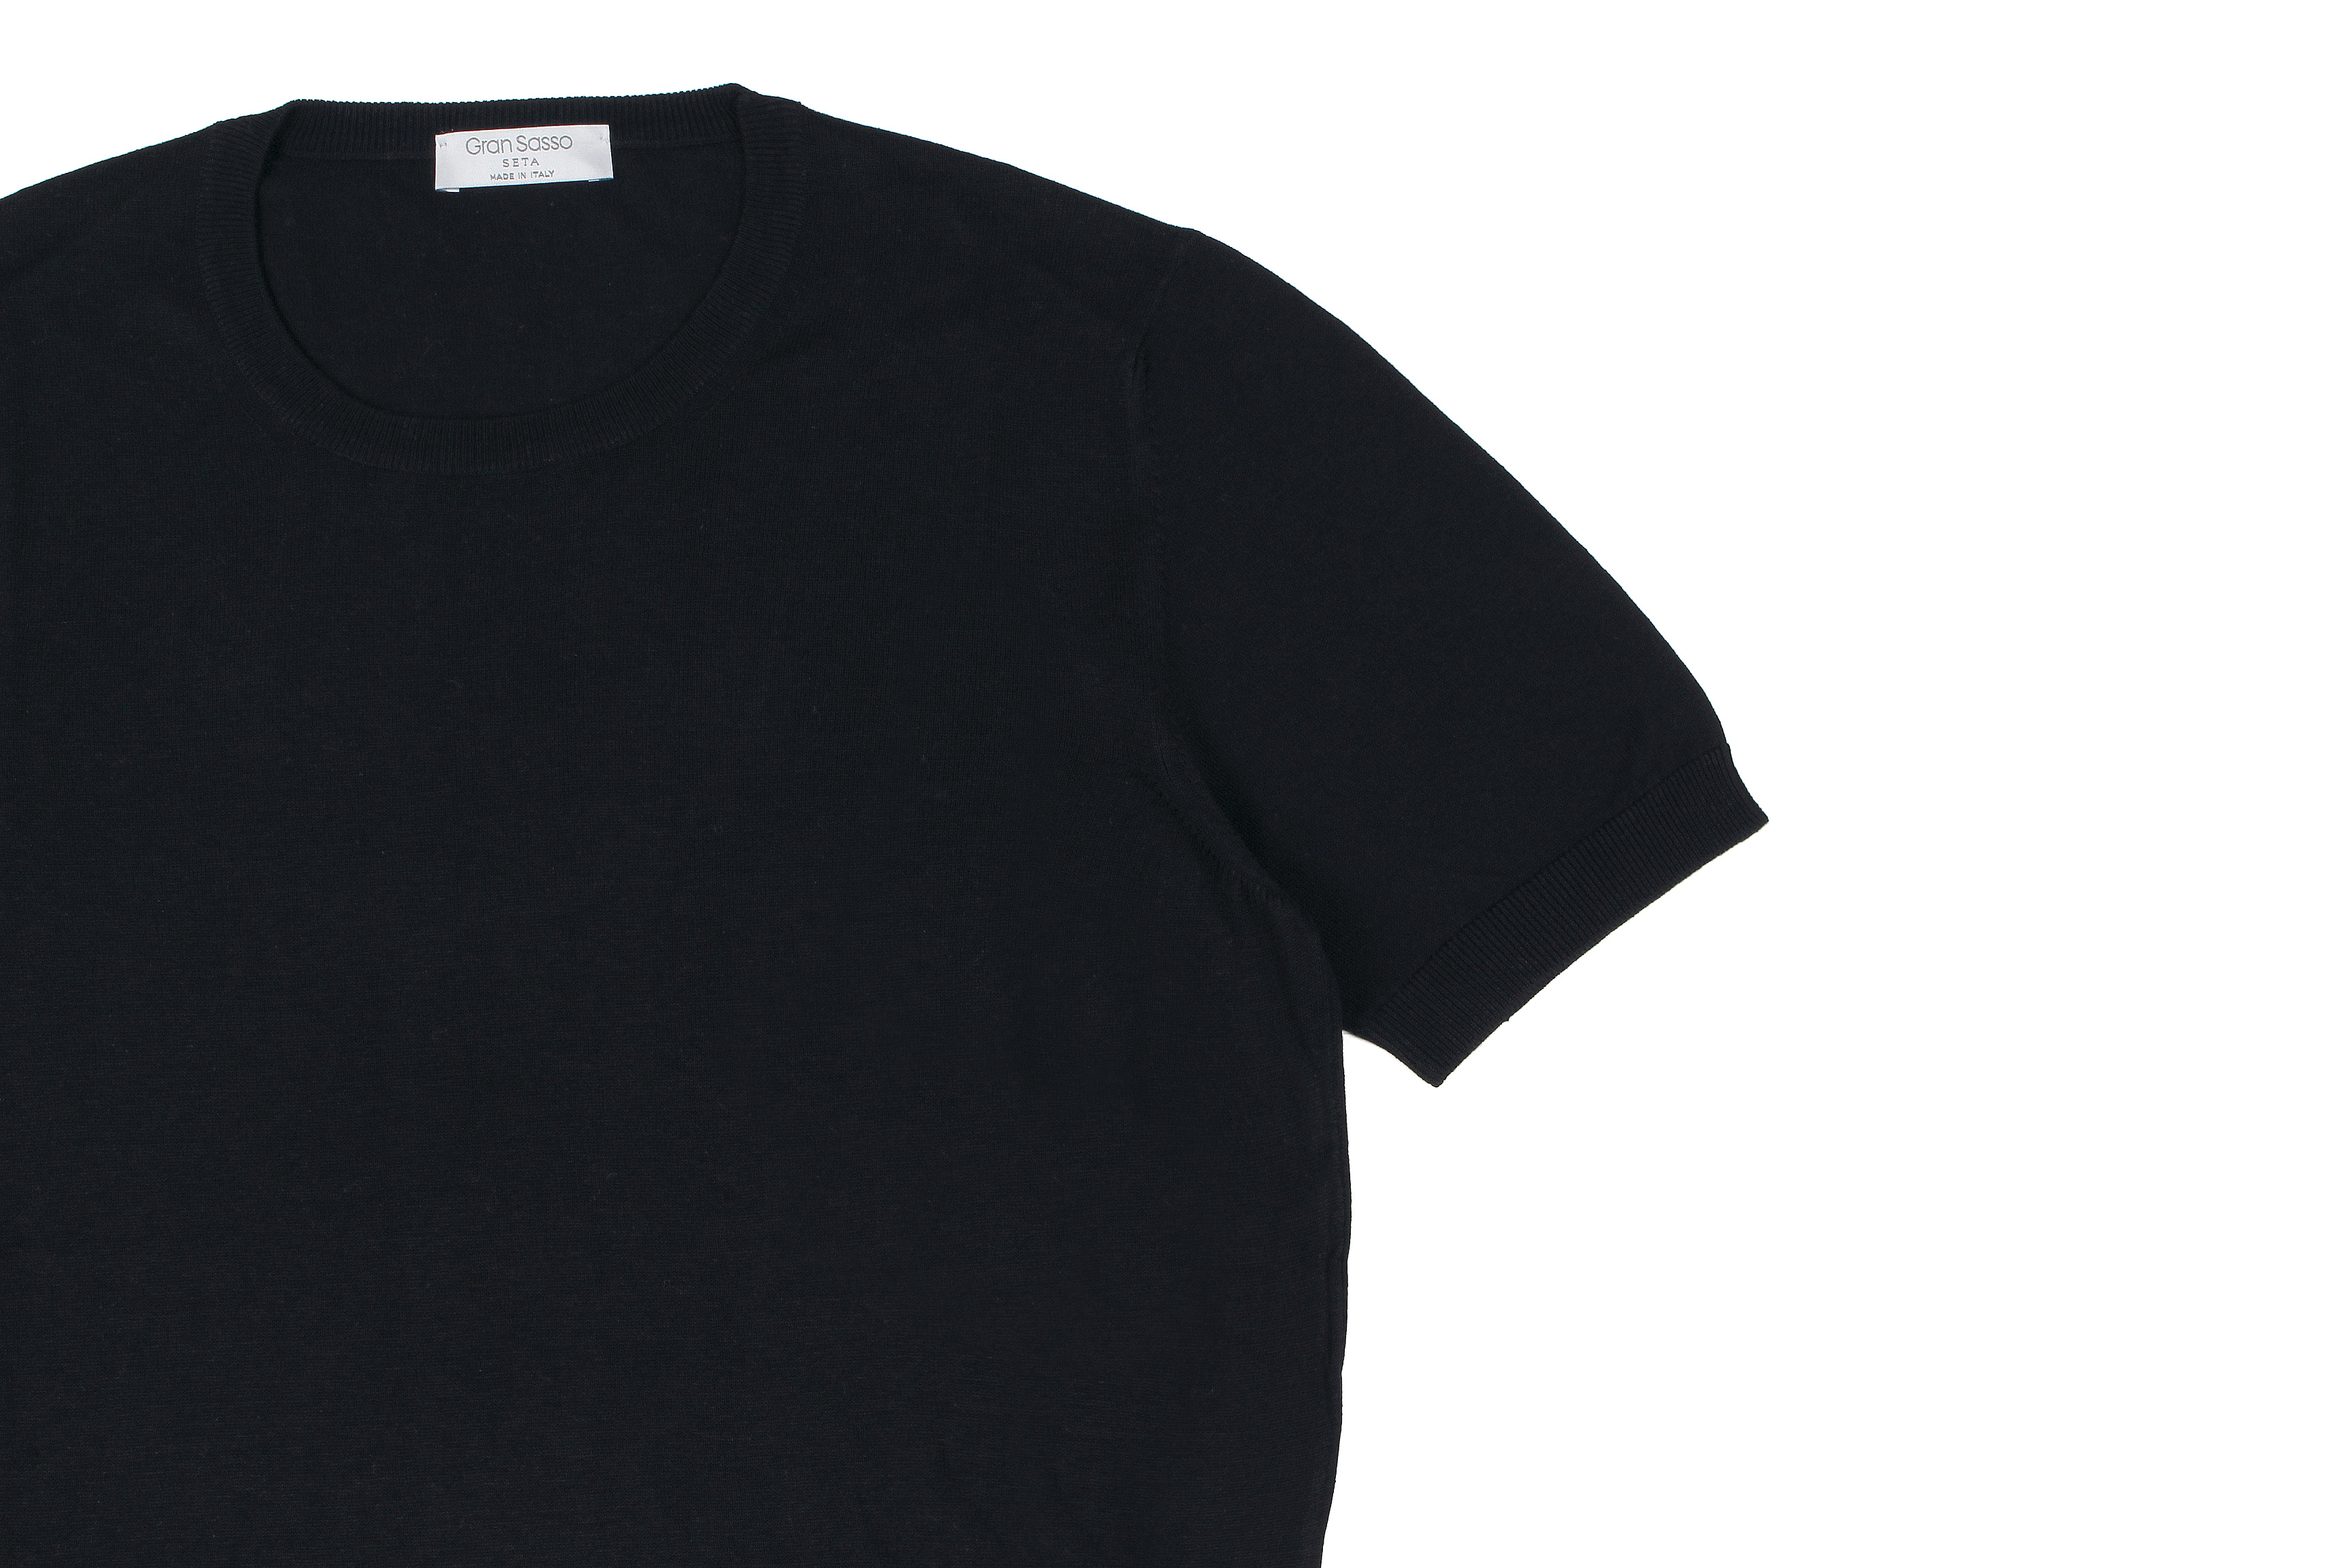 Gran Sasso (グランサッソ) Silk Knit T-shirt (シルクニット Tシャツ) SETA (シルク 100%) ショートスリーブ シルク ニット Tシャツ BLACK (ブラック・099)　made in italy (イタリア製) 2020 春夏新作 gransasso 愛知 名古屋 altoediritto アルトエデリット